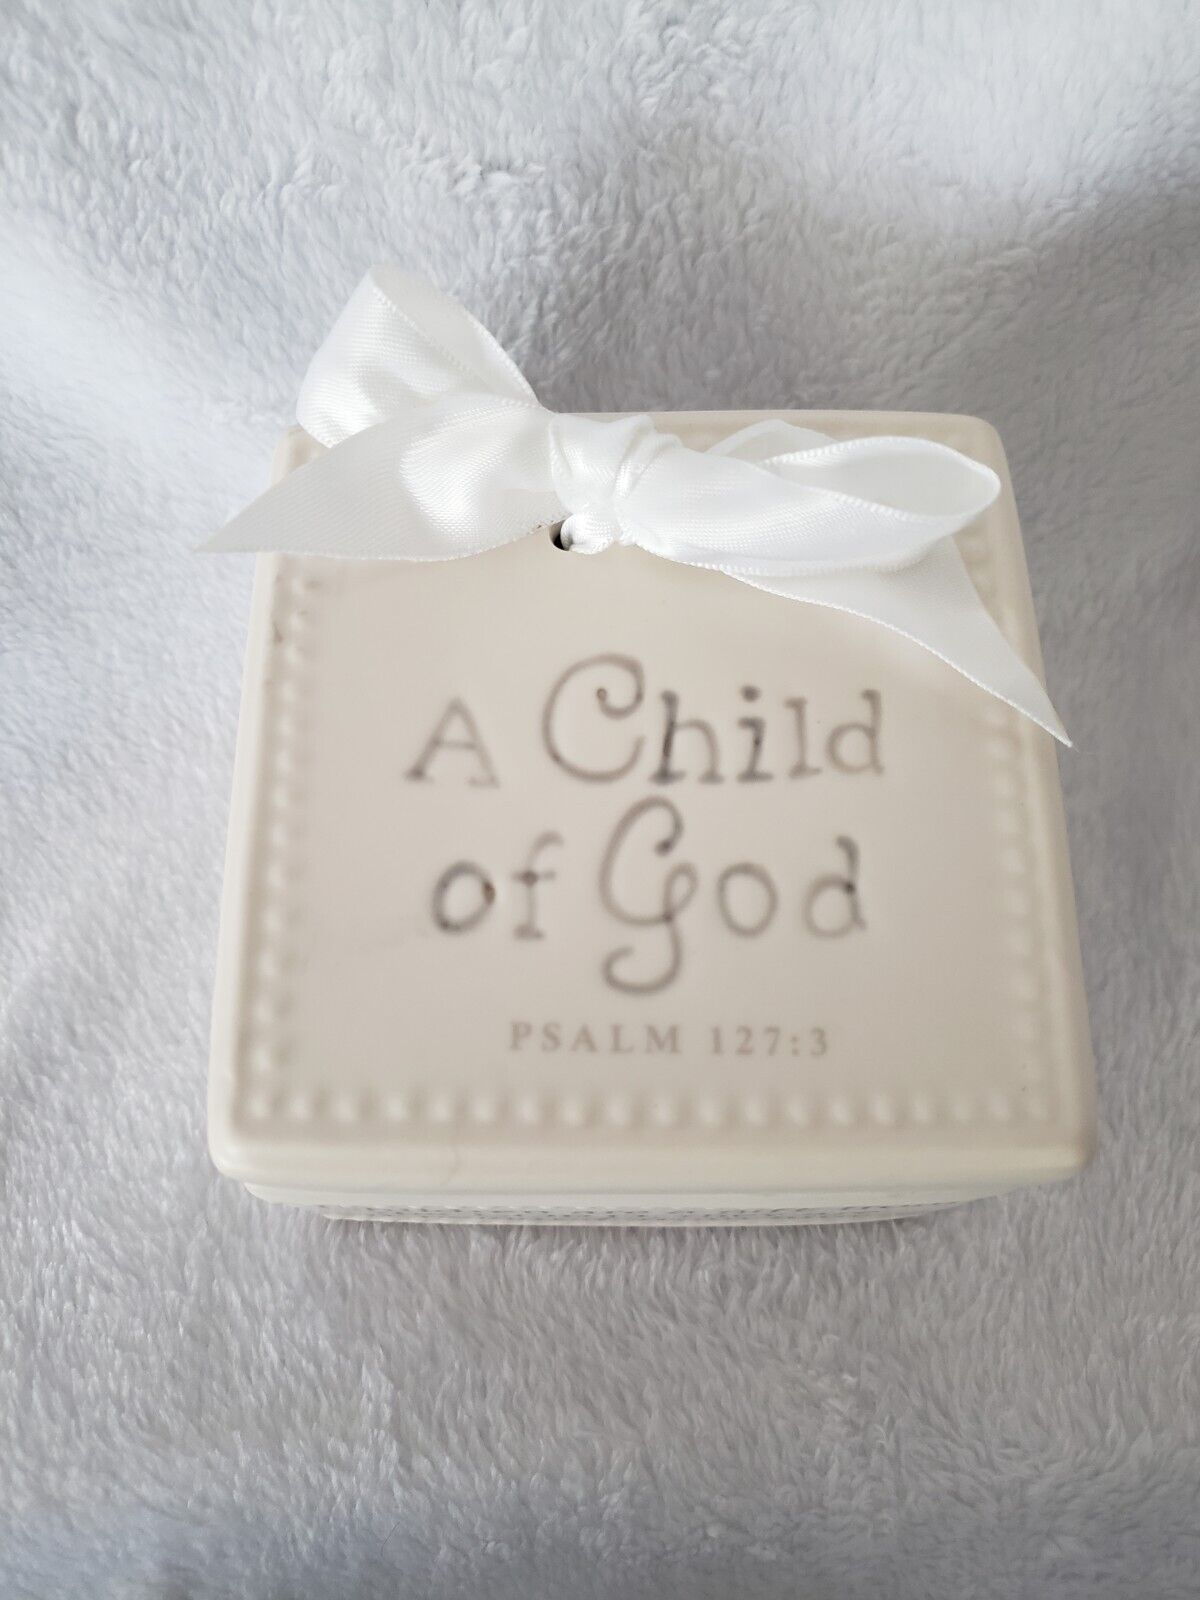 Child Of God Psalms 127:3 White Trinket Box Lighthouse Christian Products 